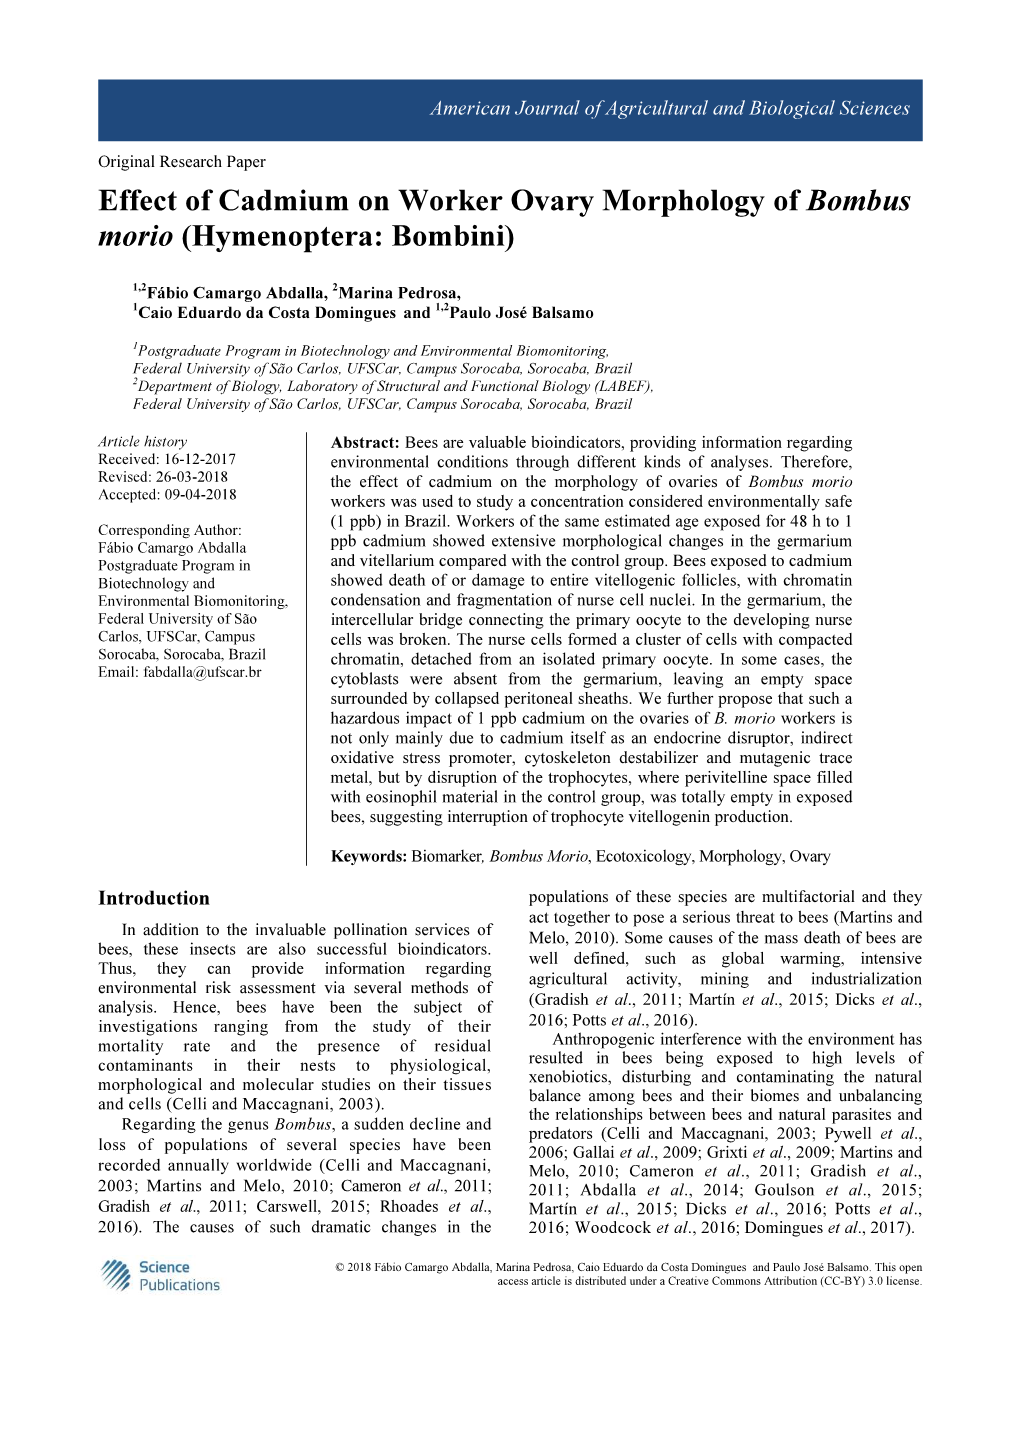 Effect of Cadmium on Worker Ovary Morphology of Bombus Morio (Hymenoptera: Bombini)